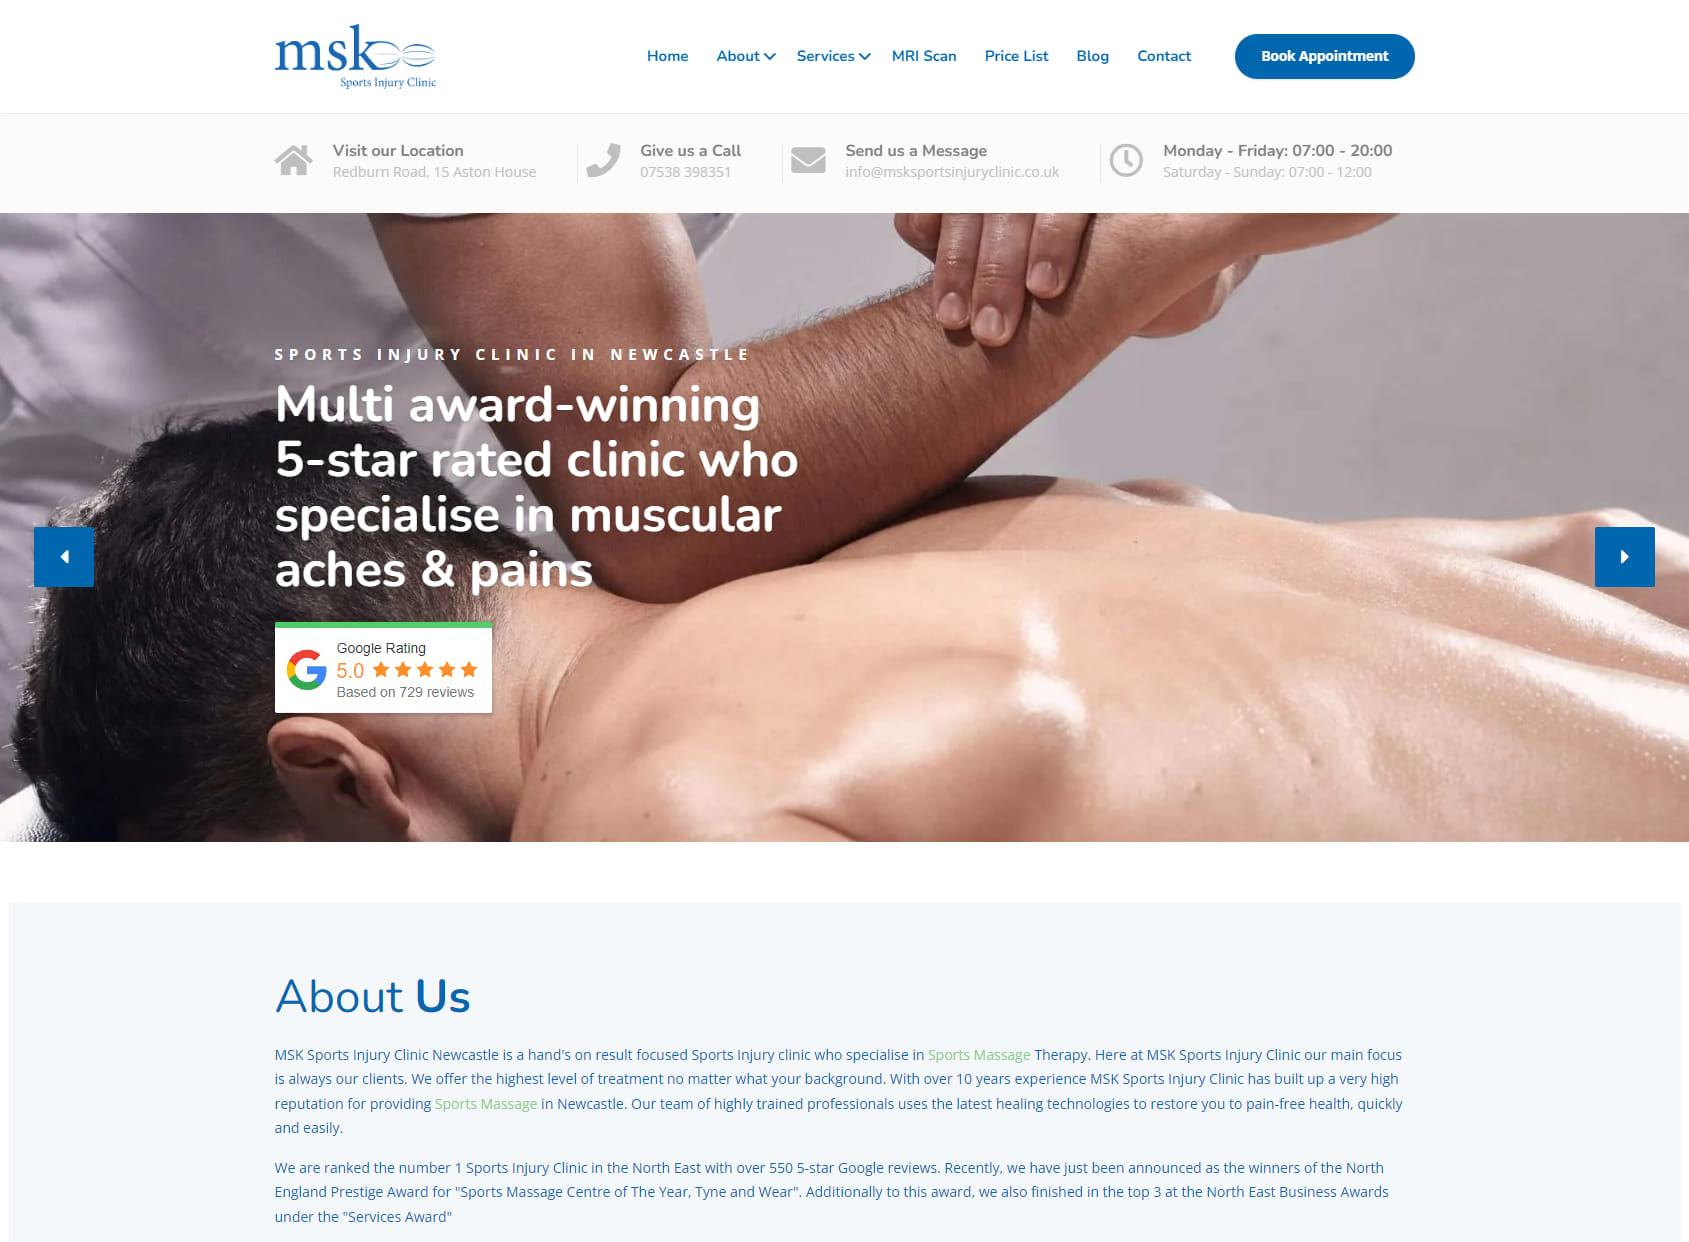 MSK Sports Injury Clinic